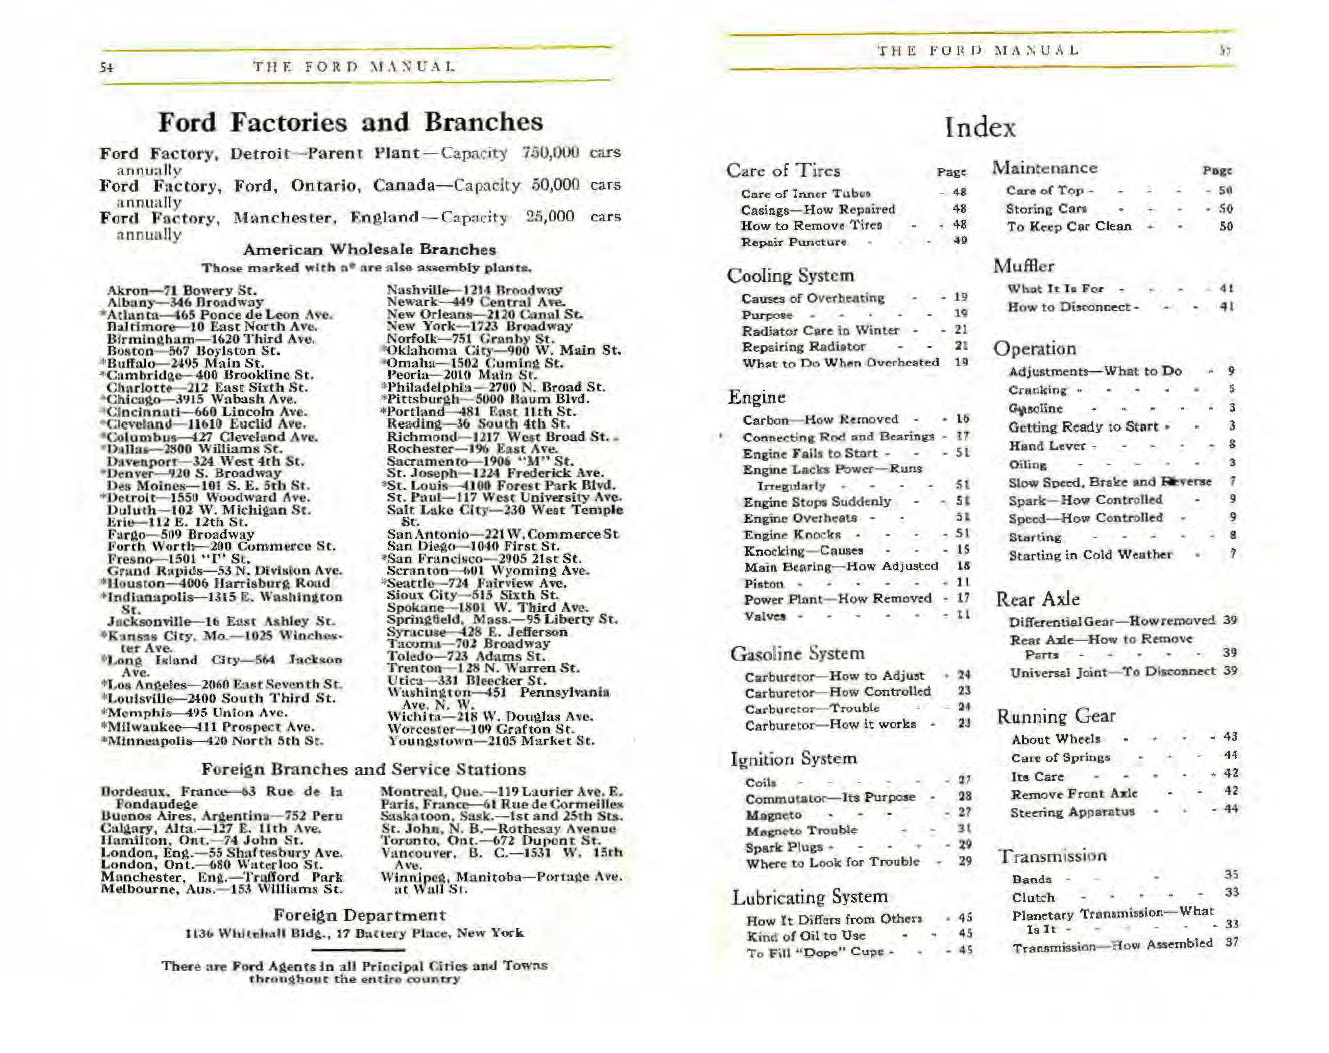 n_1917 Ford Owners Manual-54-55.jpg